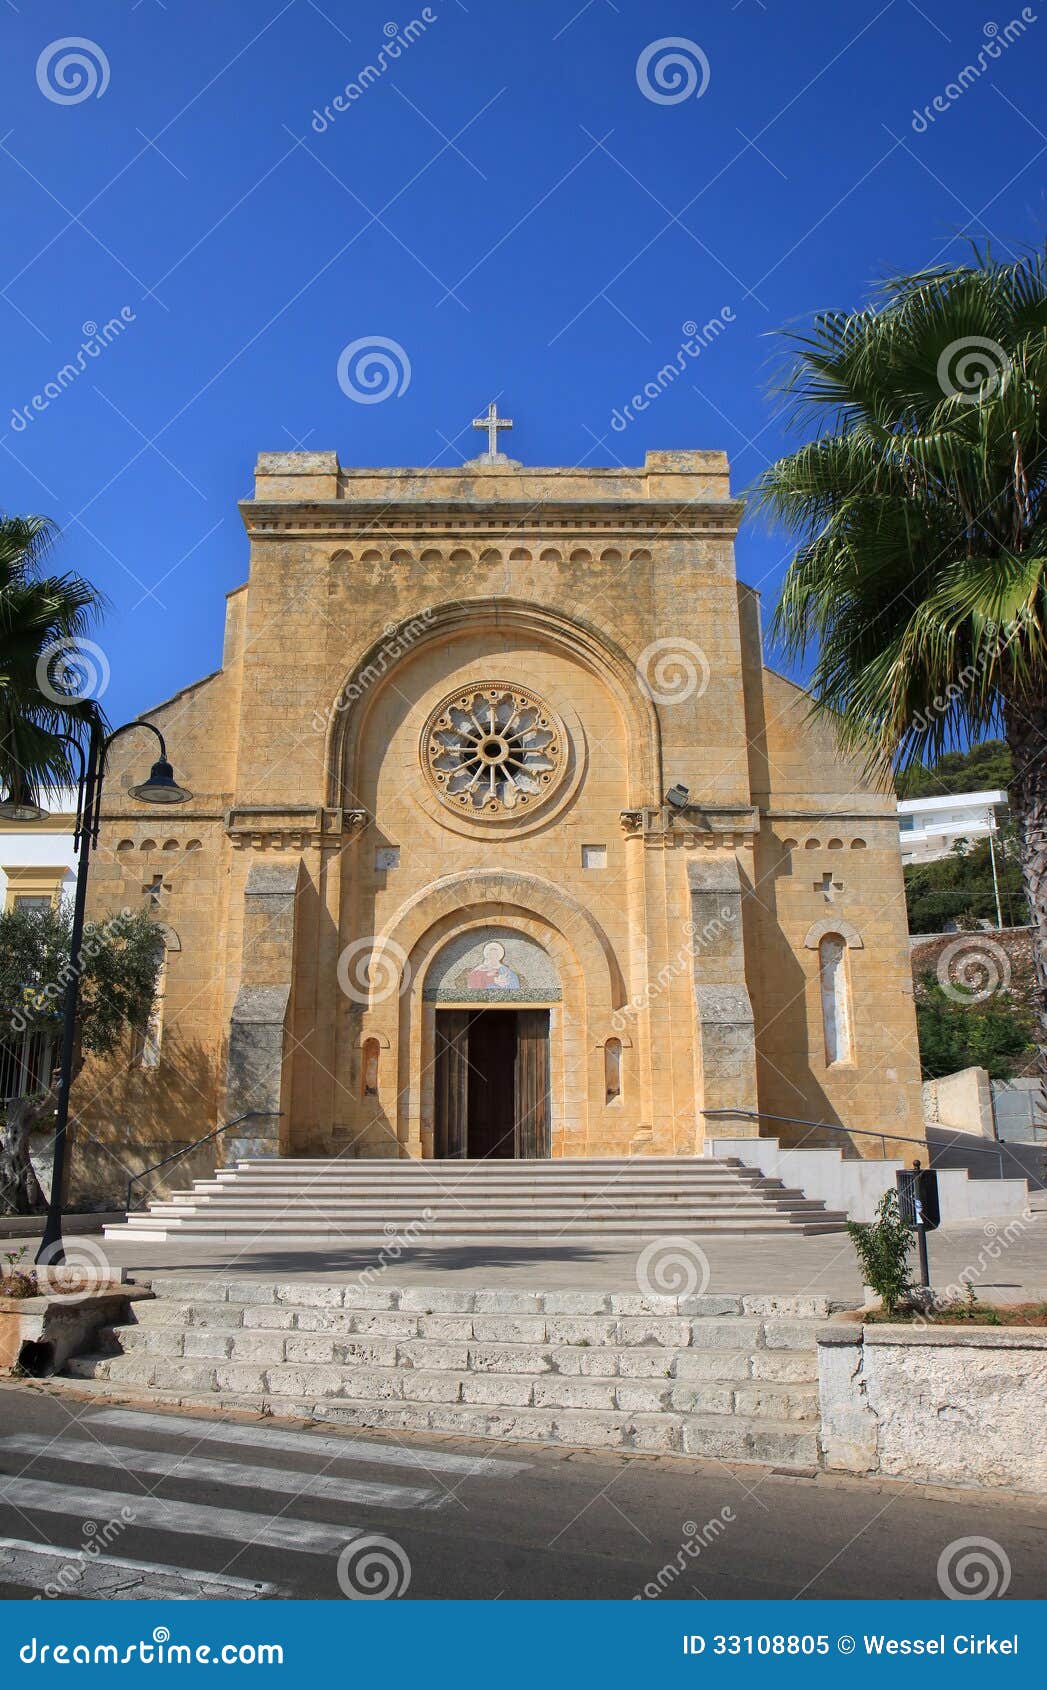 chiesa di san giuseppe, santa cesarea terme, italy